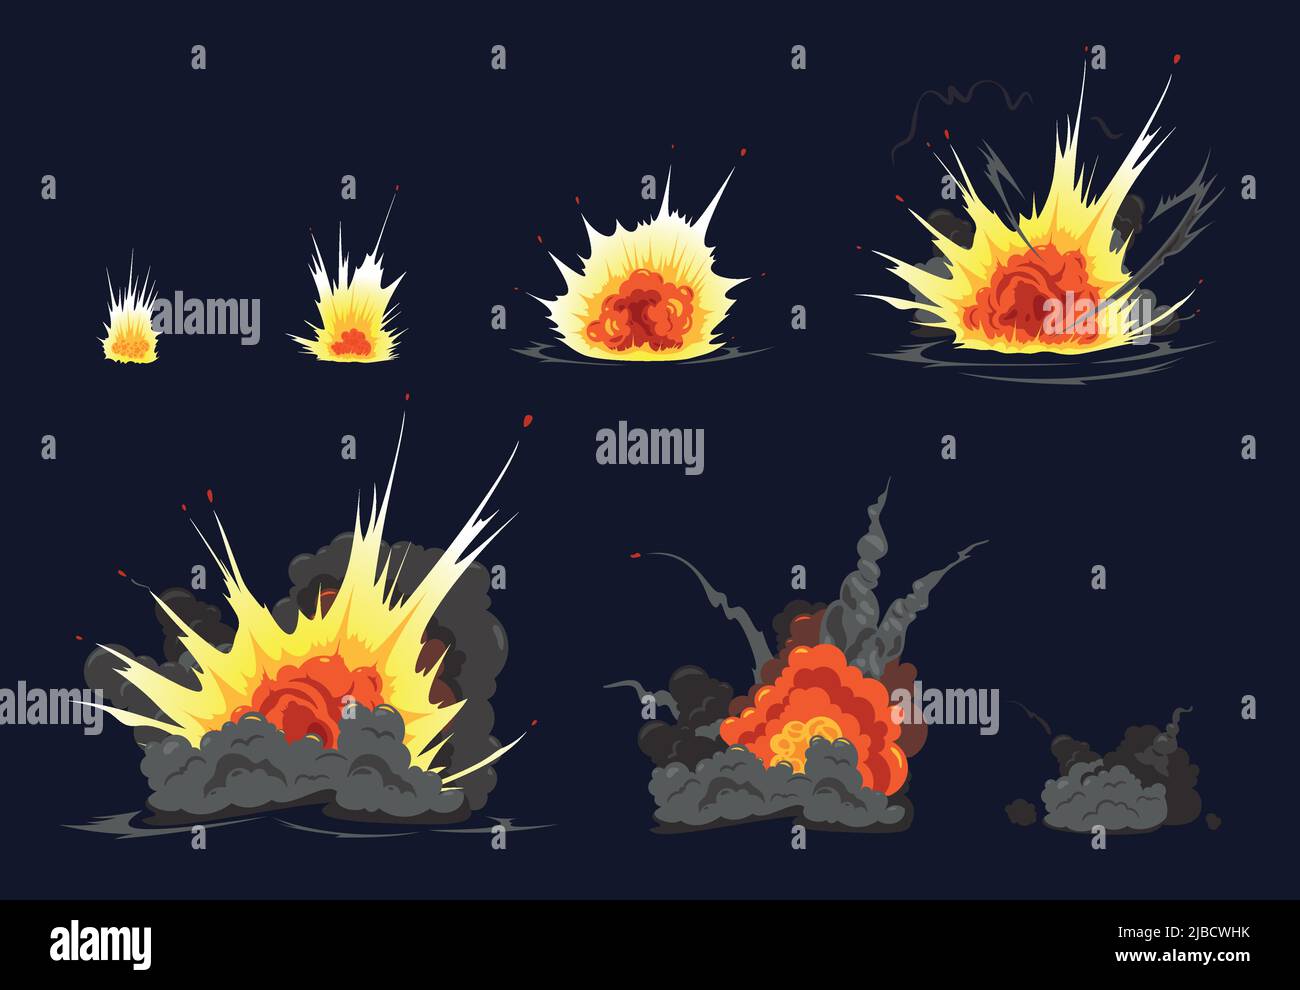 Bomb Explosion Cartoon Animation Comics Streifen Serie mit bunten Feuer Knall Trümmer Wolke schwarzen Hintergrund Vektor Illustration Stock Vektor